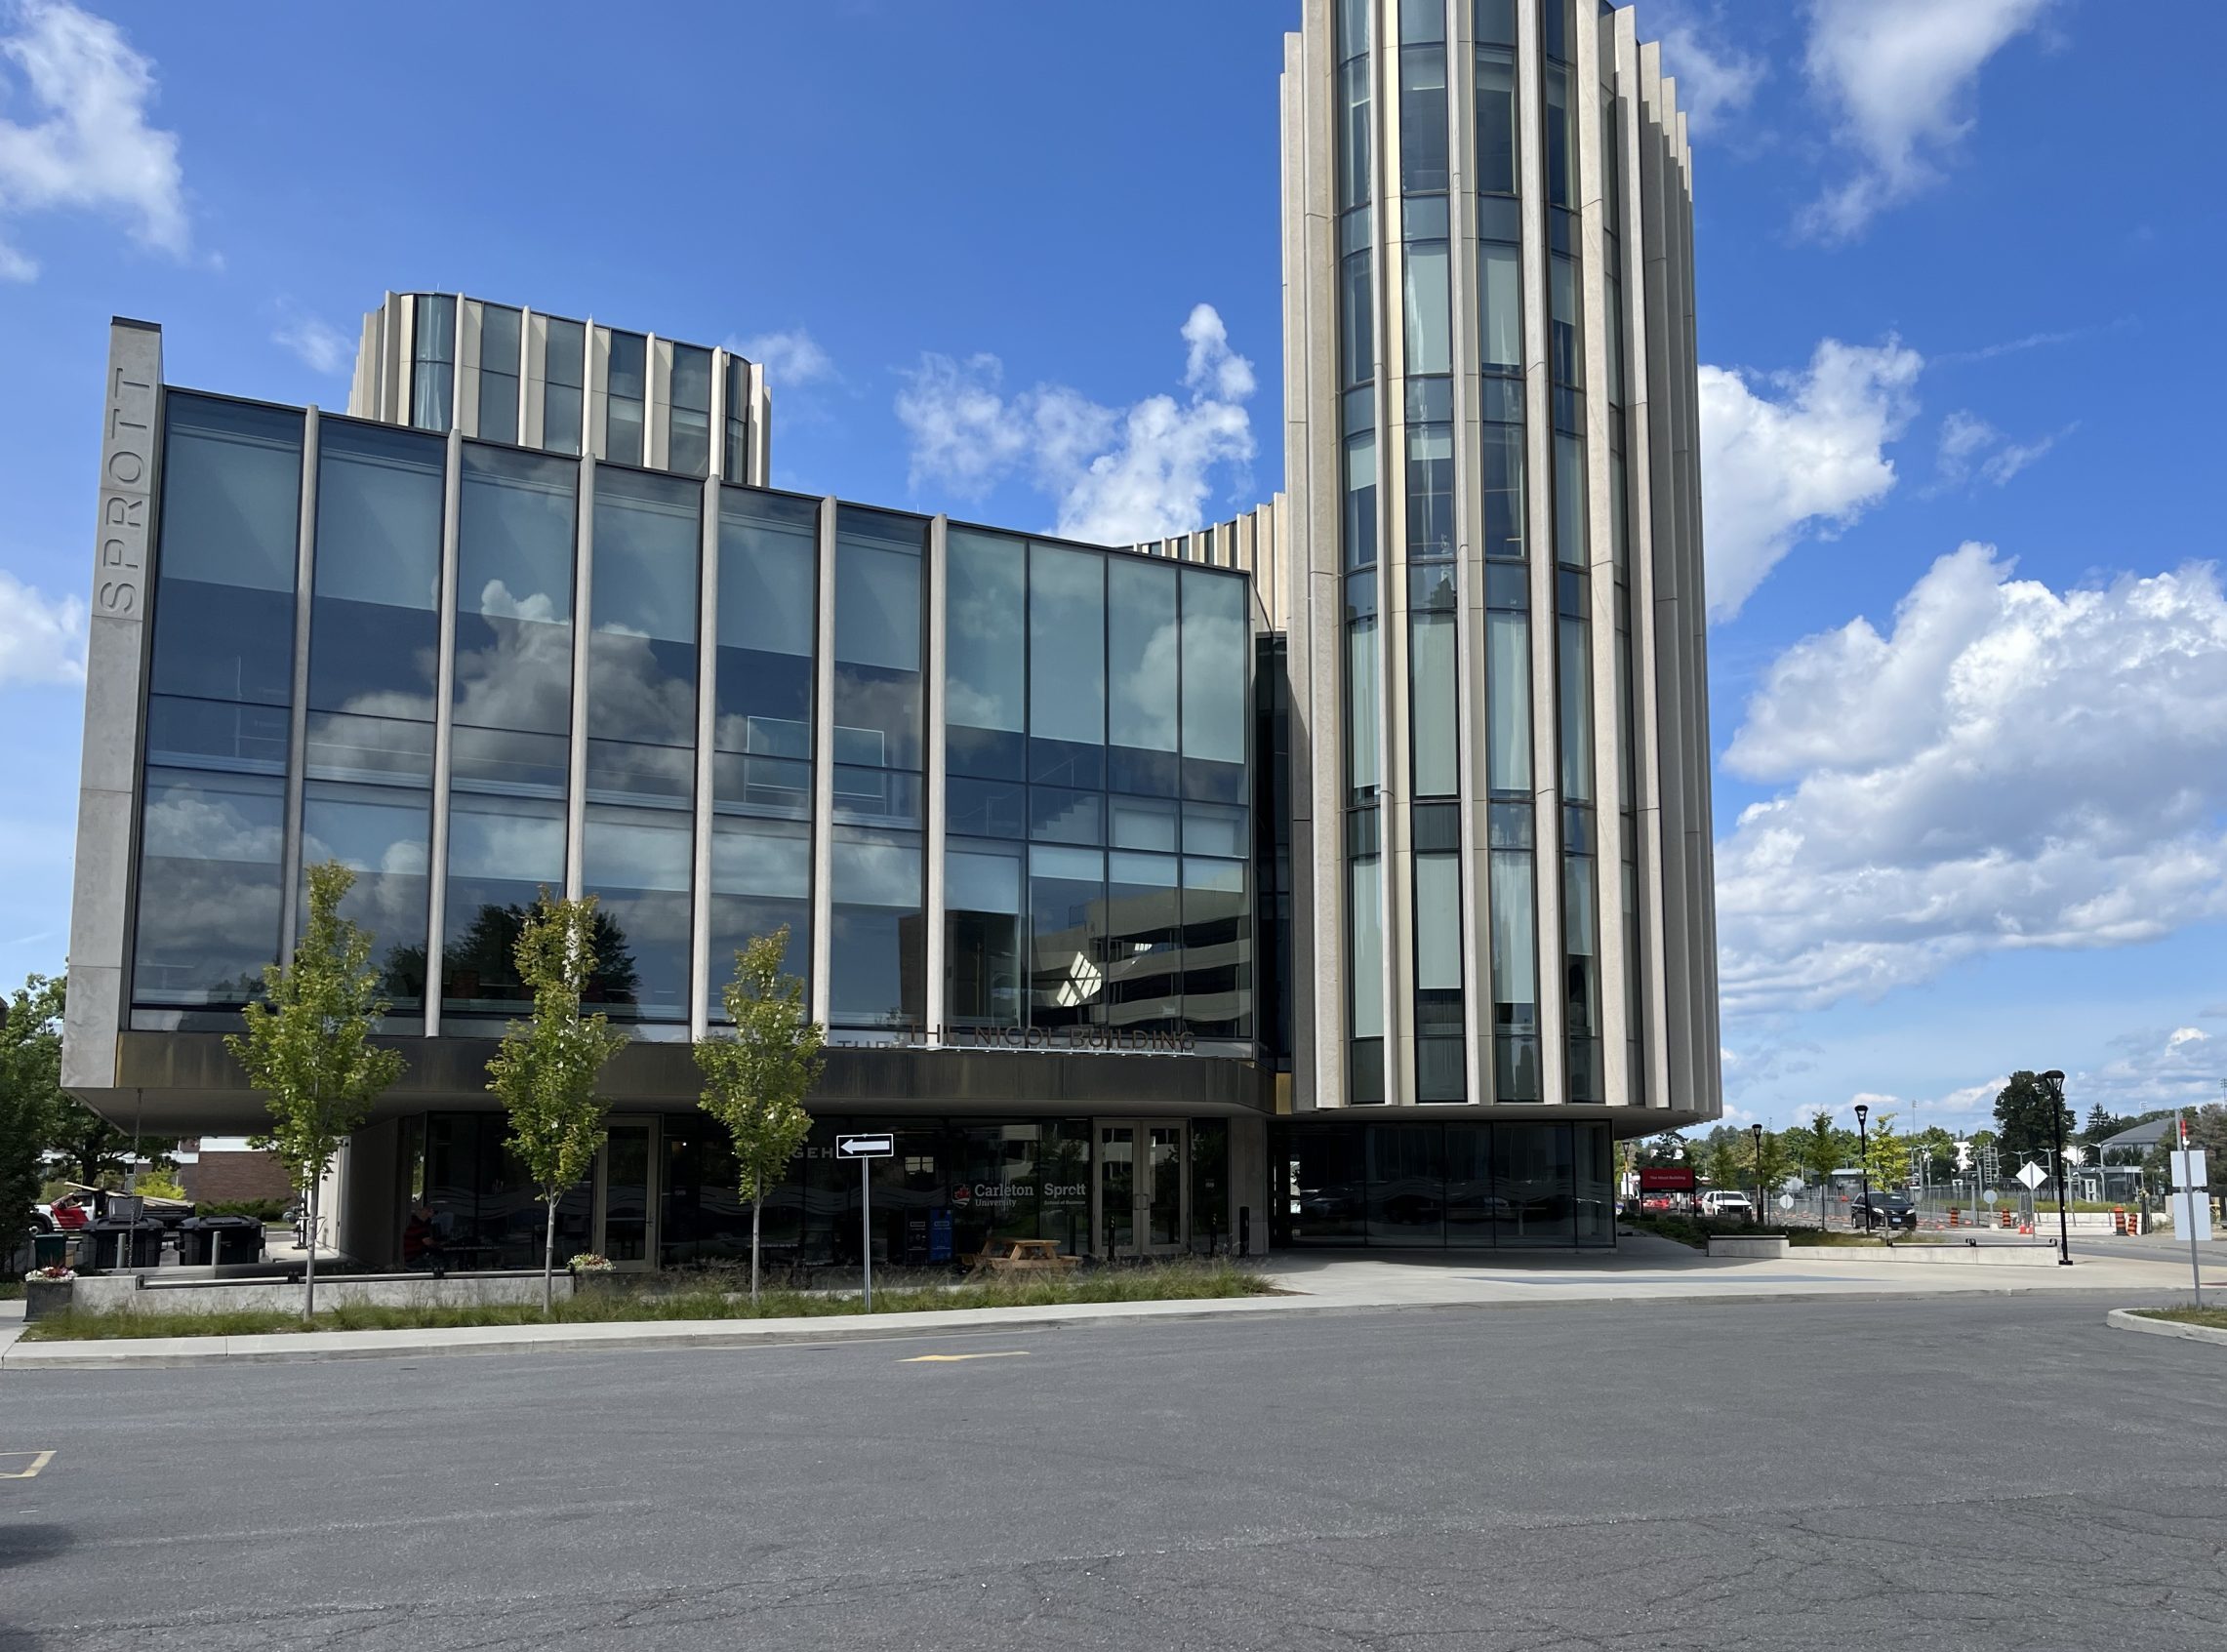 Carleton University Nicol Building, Sprott School of Business – 4 Green Globes